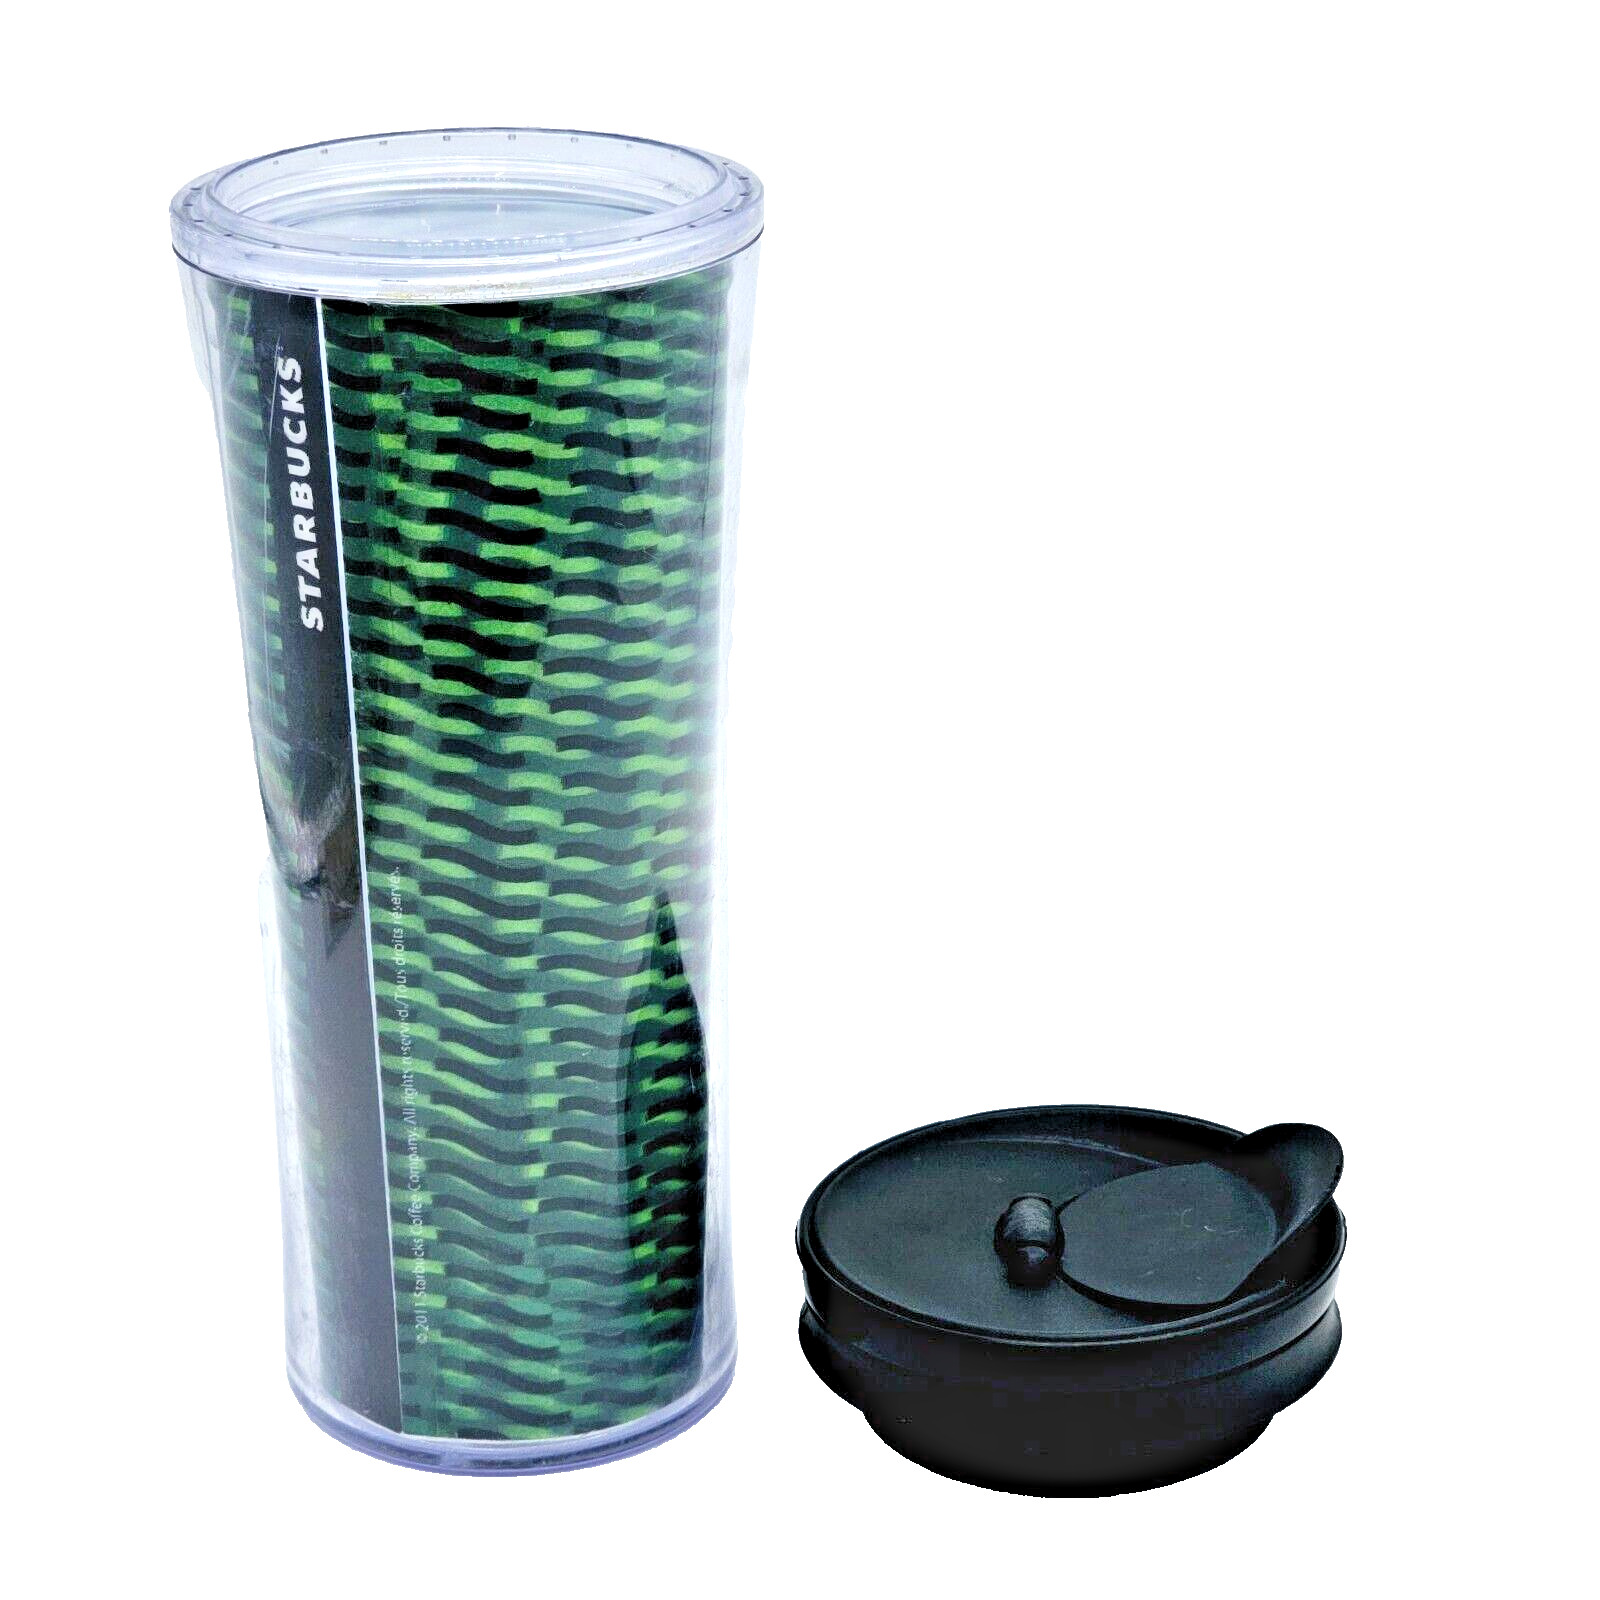 2011 Starbucks Green 3D Lenticular Travel Mug 16 fl oz plastic Lid Cup